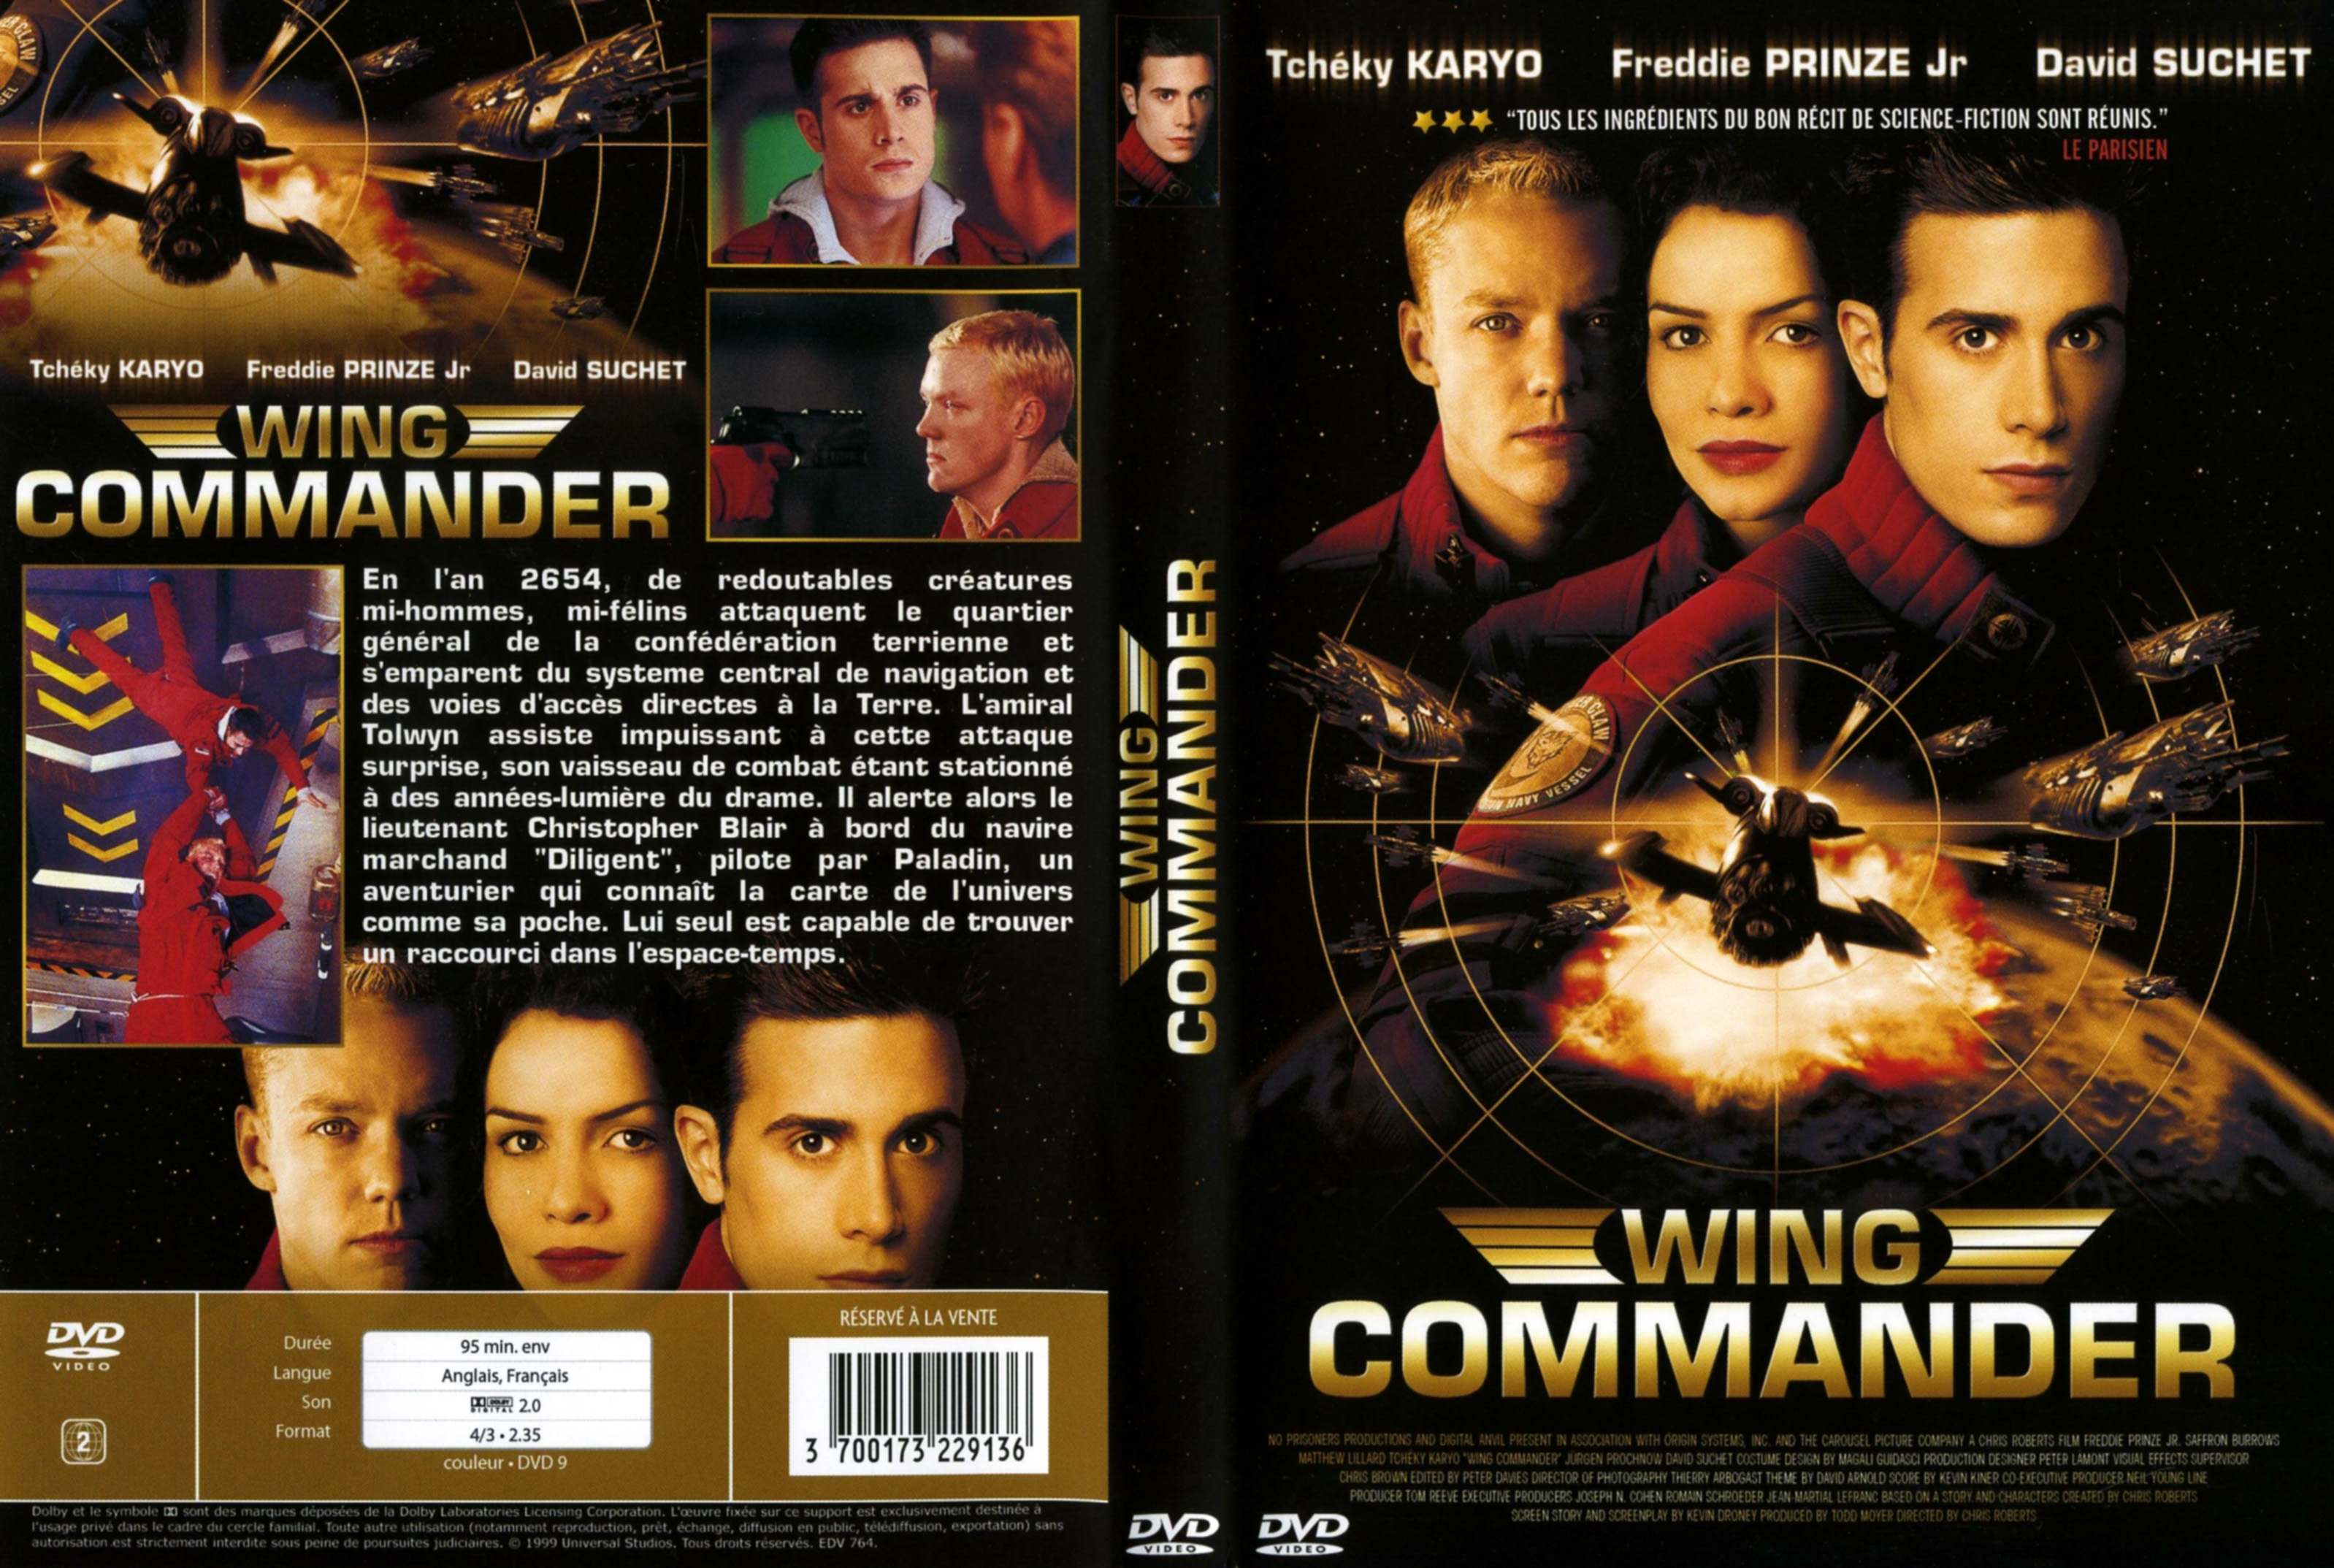 Jaquette DVD Wing commander